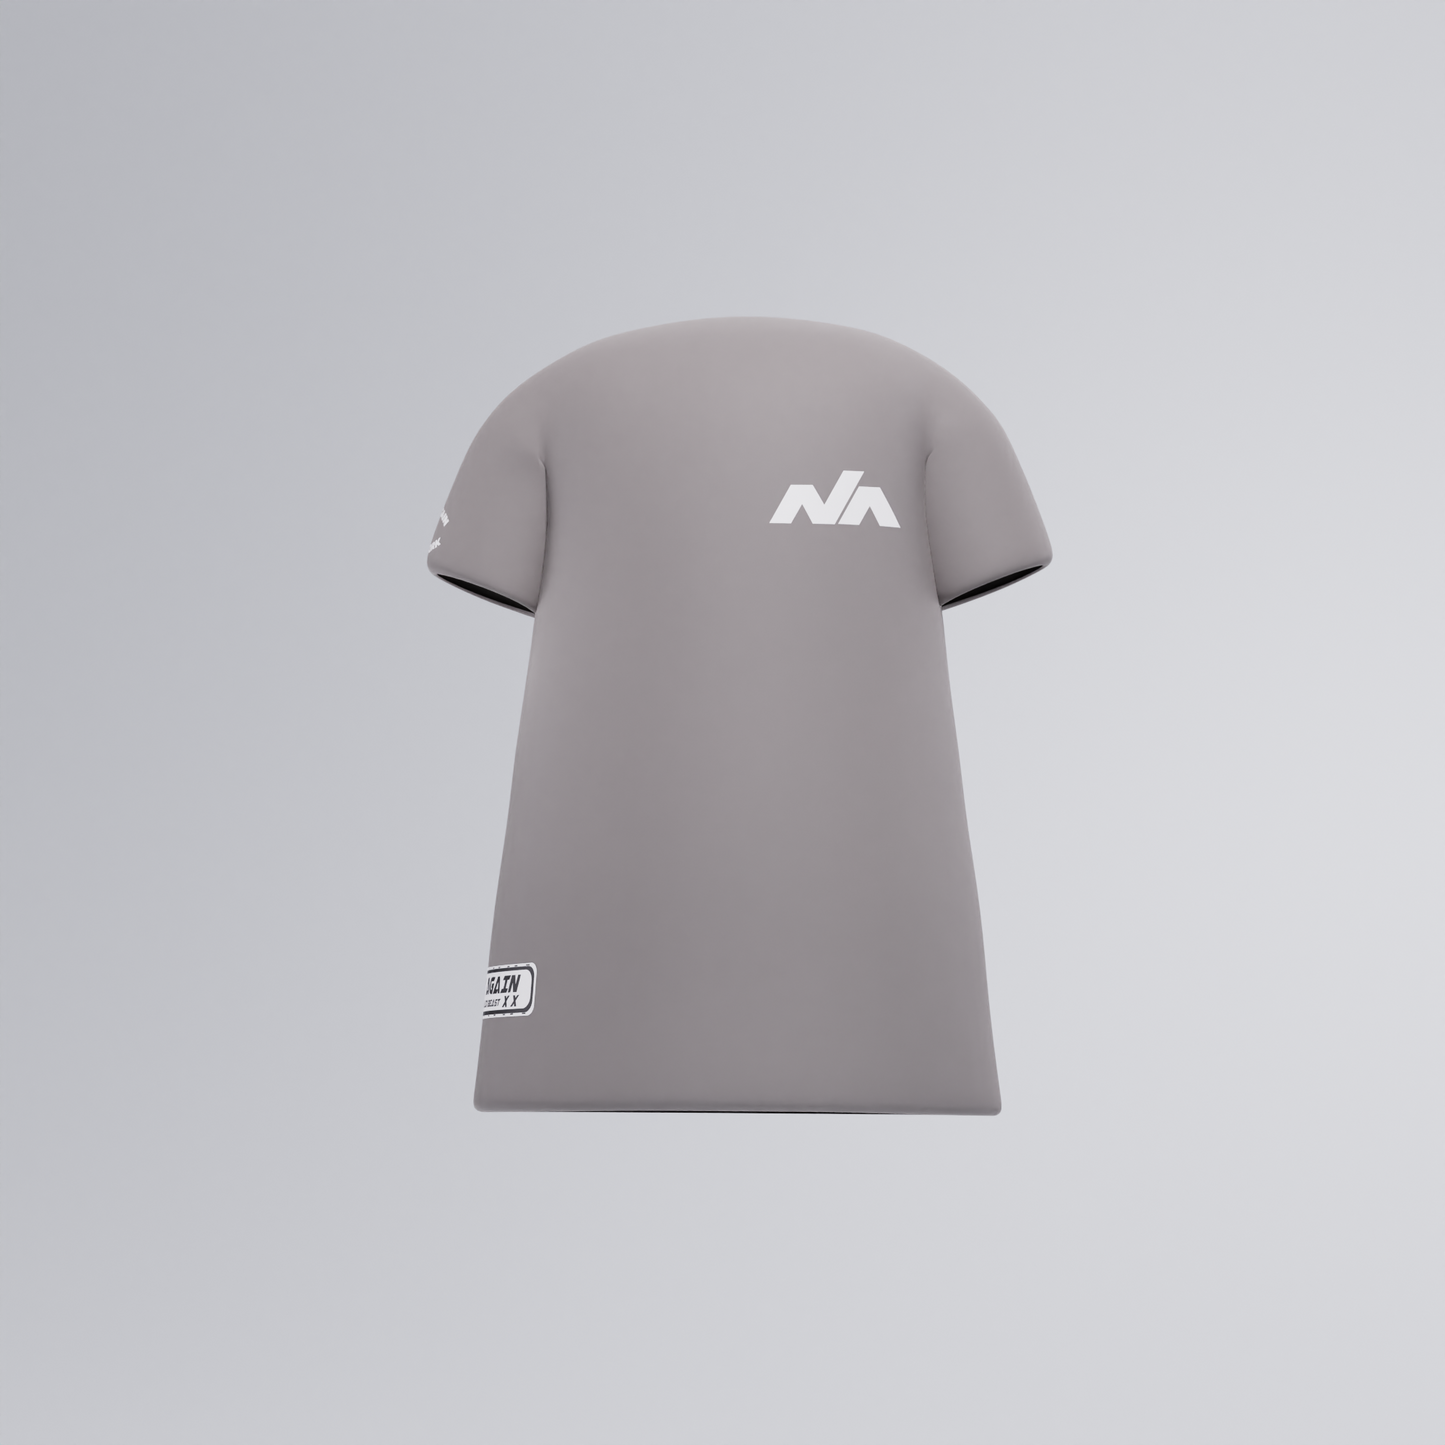 XX "N-A" T-Shirt (Digital Download)